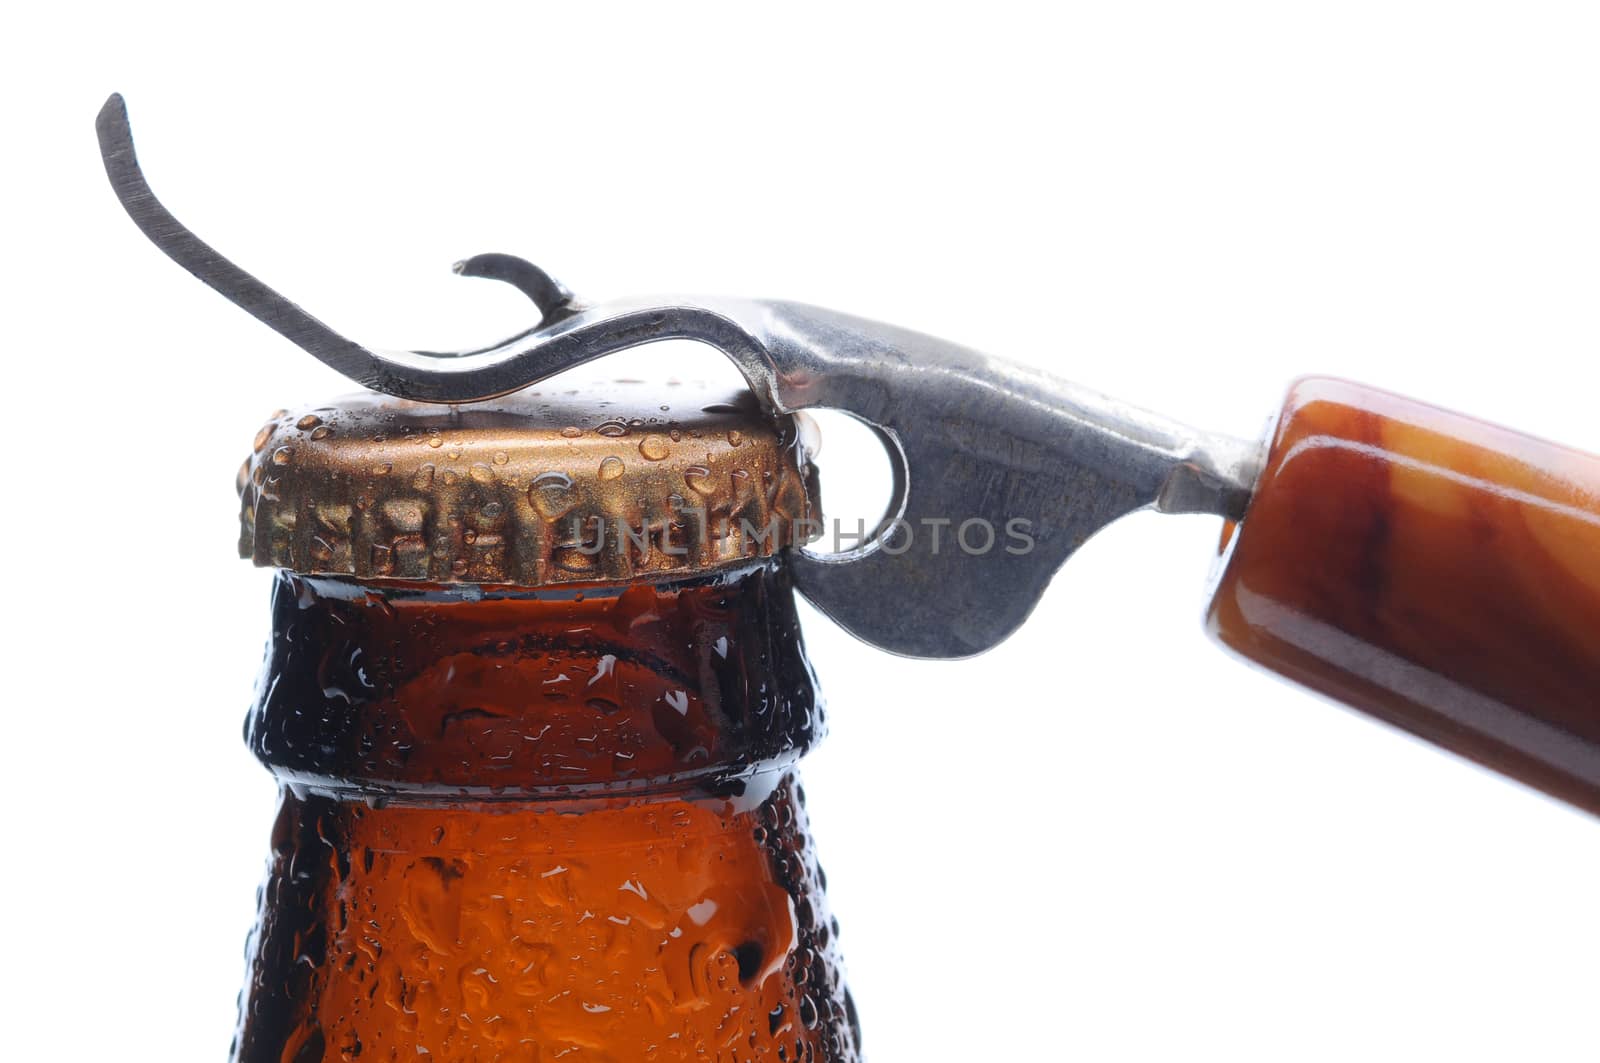 Macro Beer Bottle and Opener by sCukrov